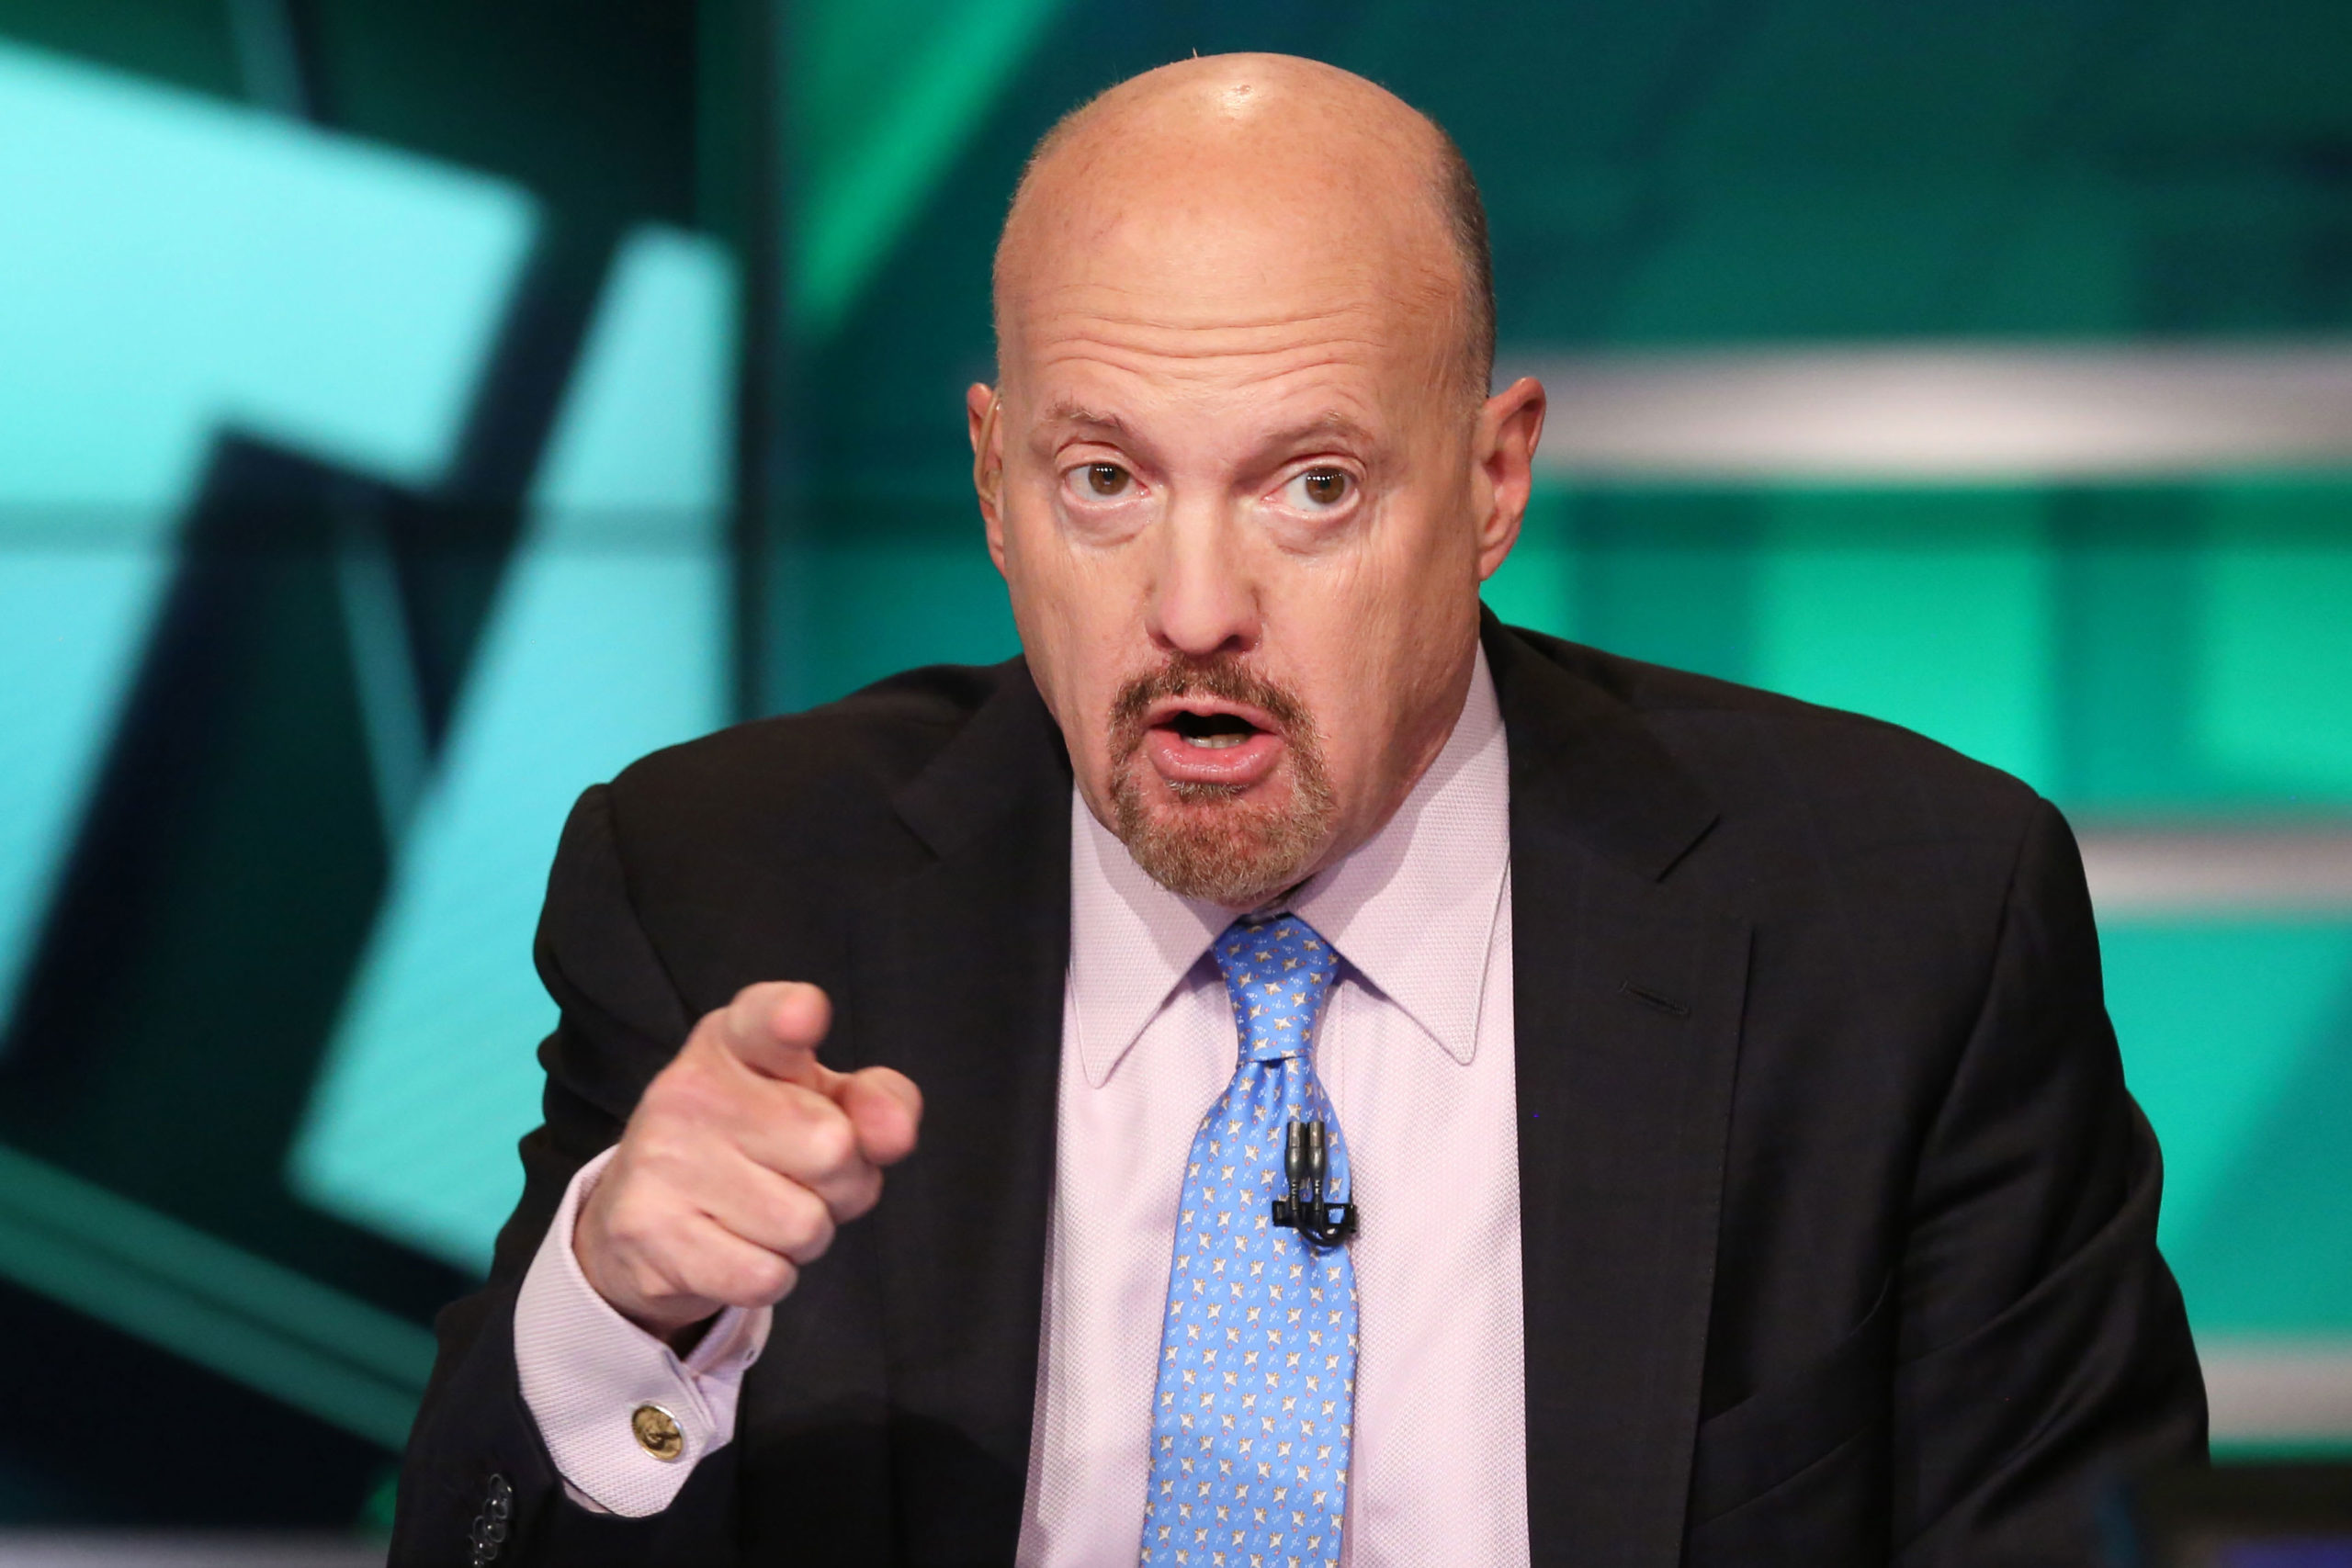 Cramer sees bullish market tendencies regardless of who wins, Trump or Biden